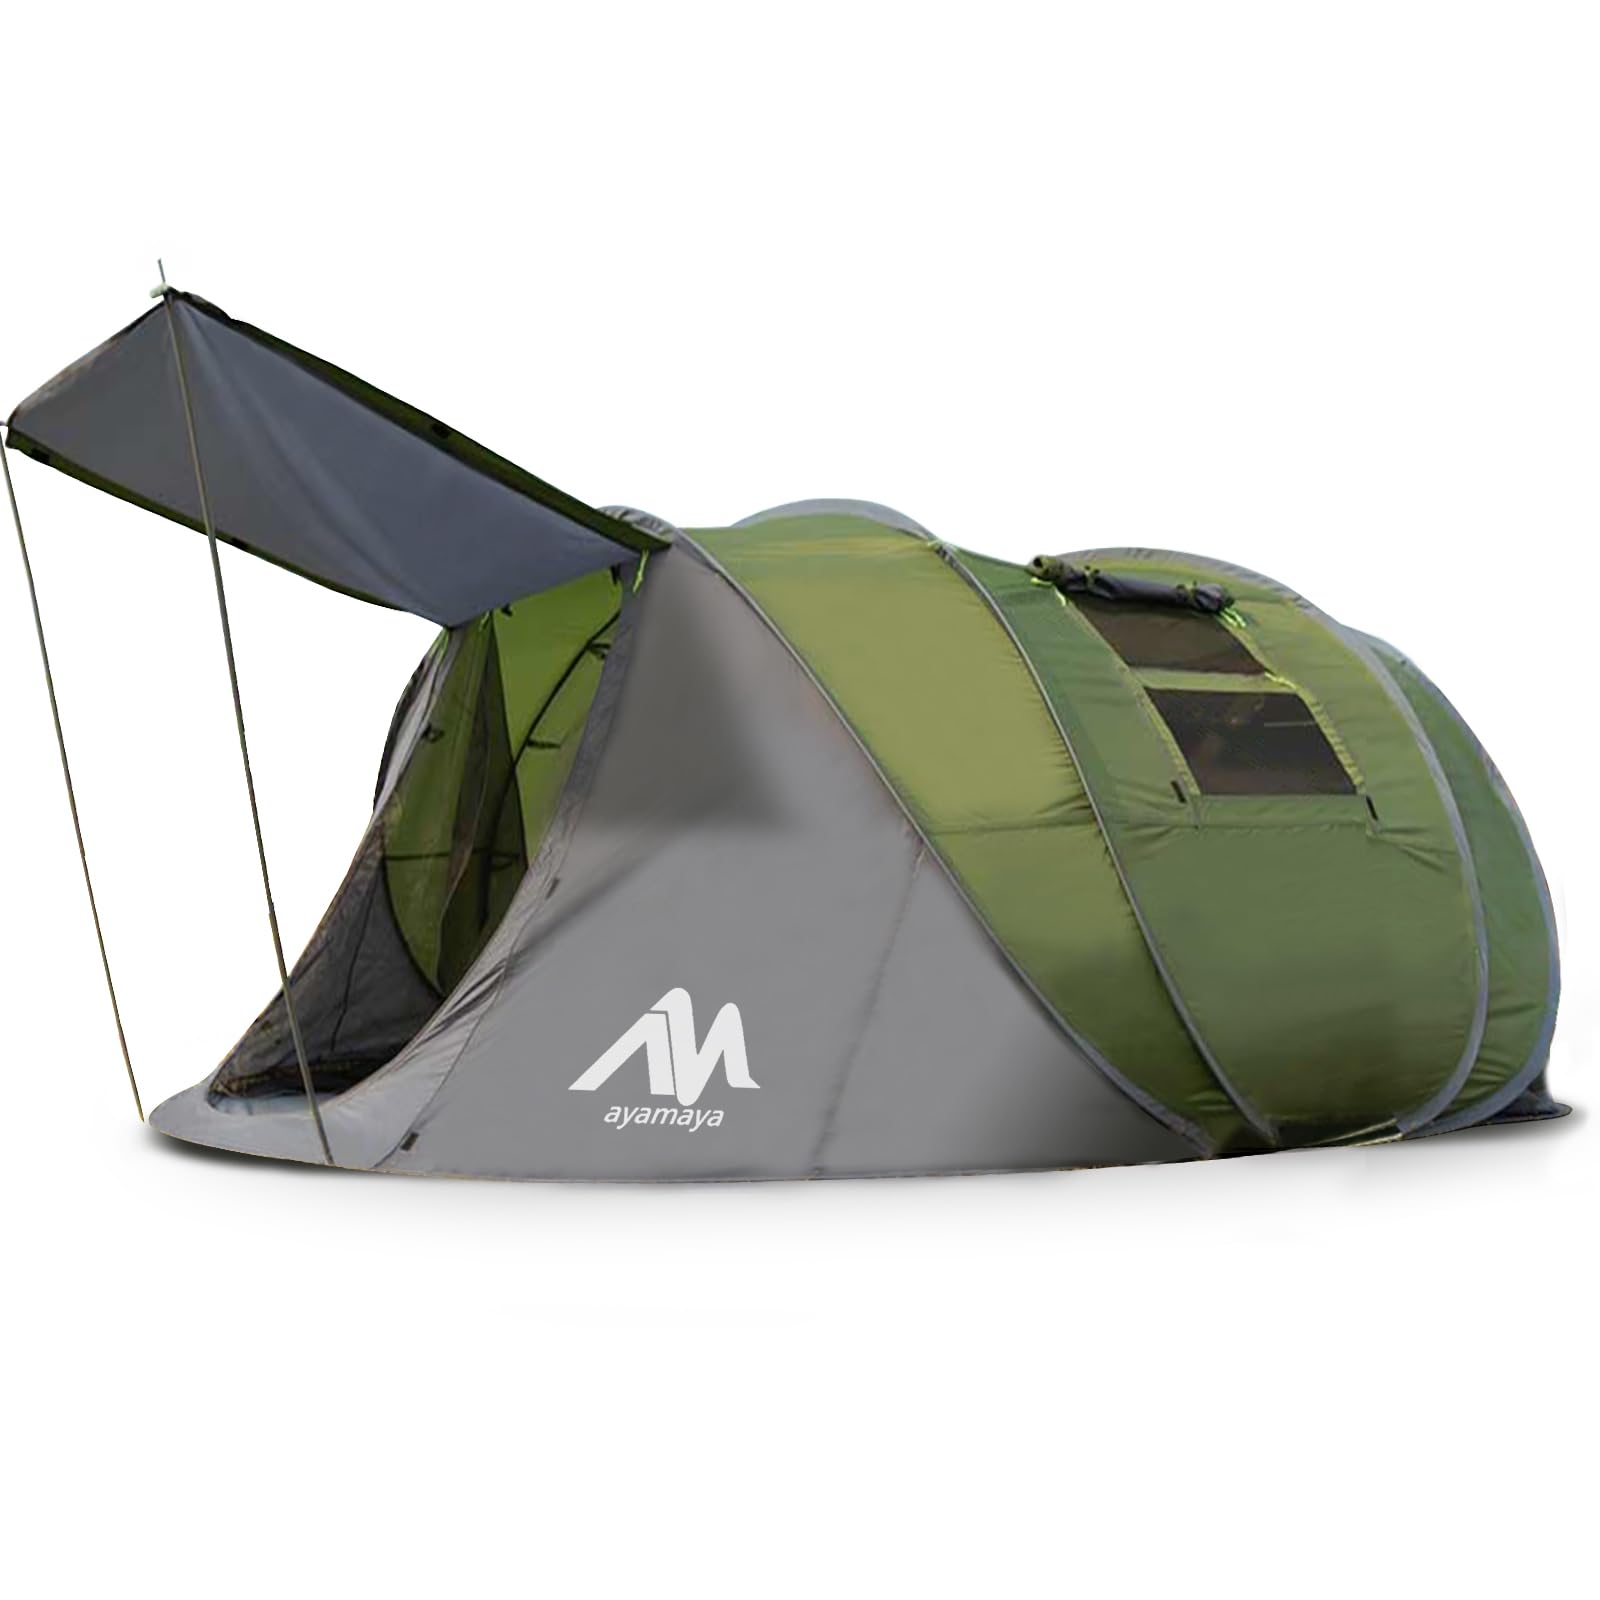 <a href="https://www.amazon.com/dp/B07T17SLFZ?%3Fth=1&psc=1&tag=thecampfire0d-20">AYAMAYA Pop Up Tent</a>